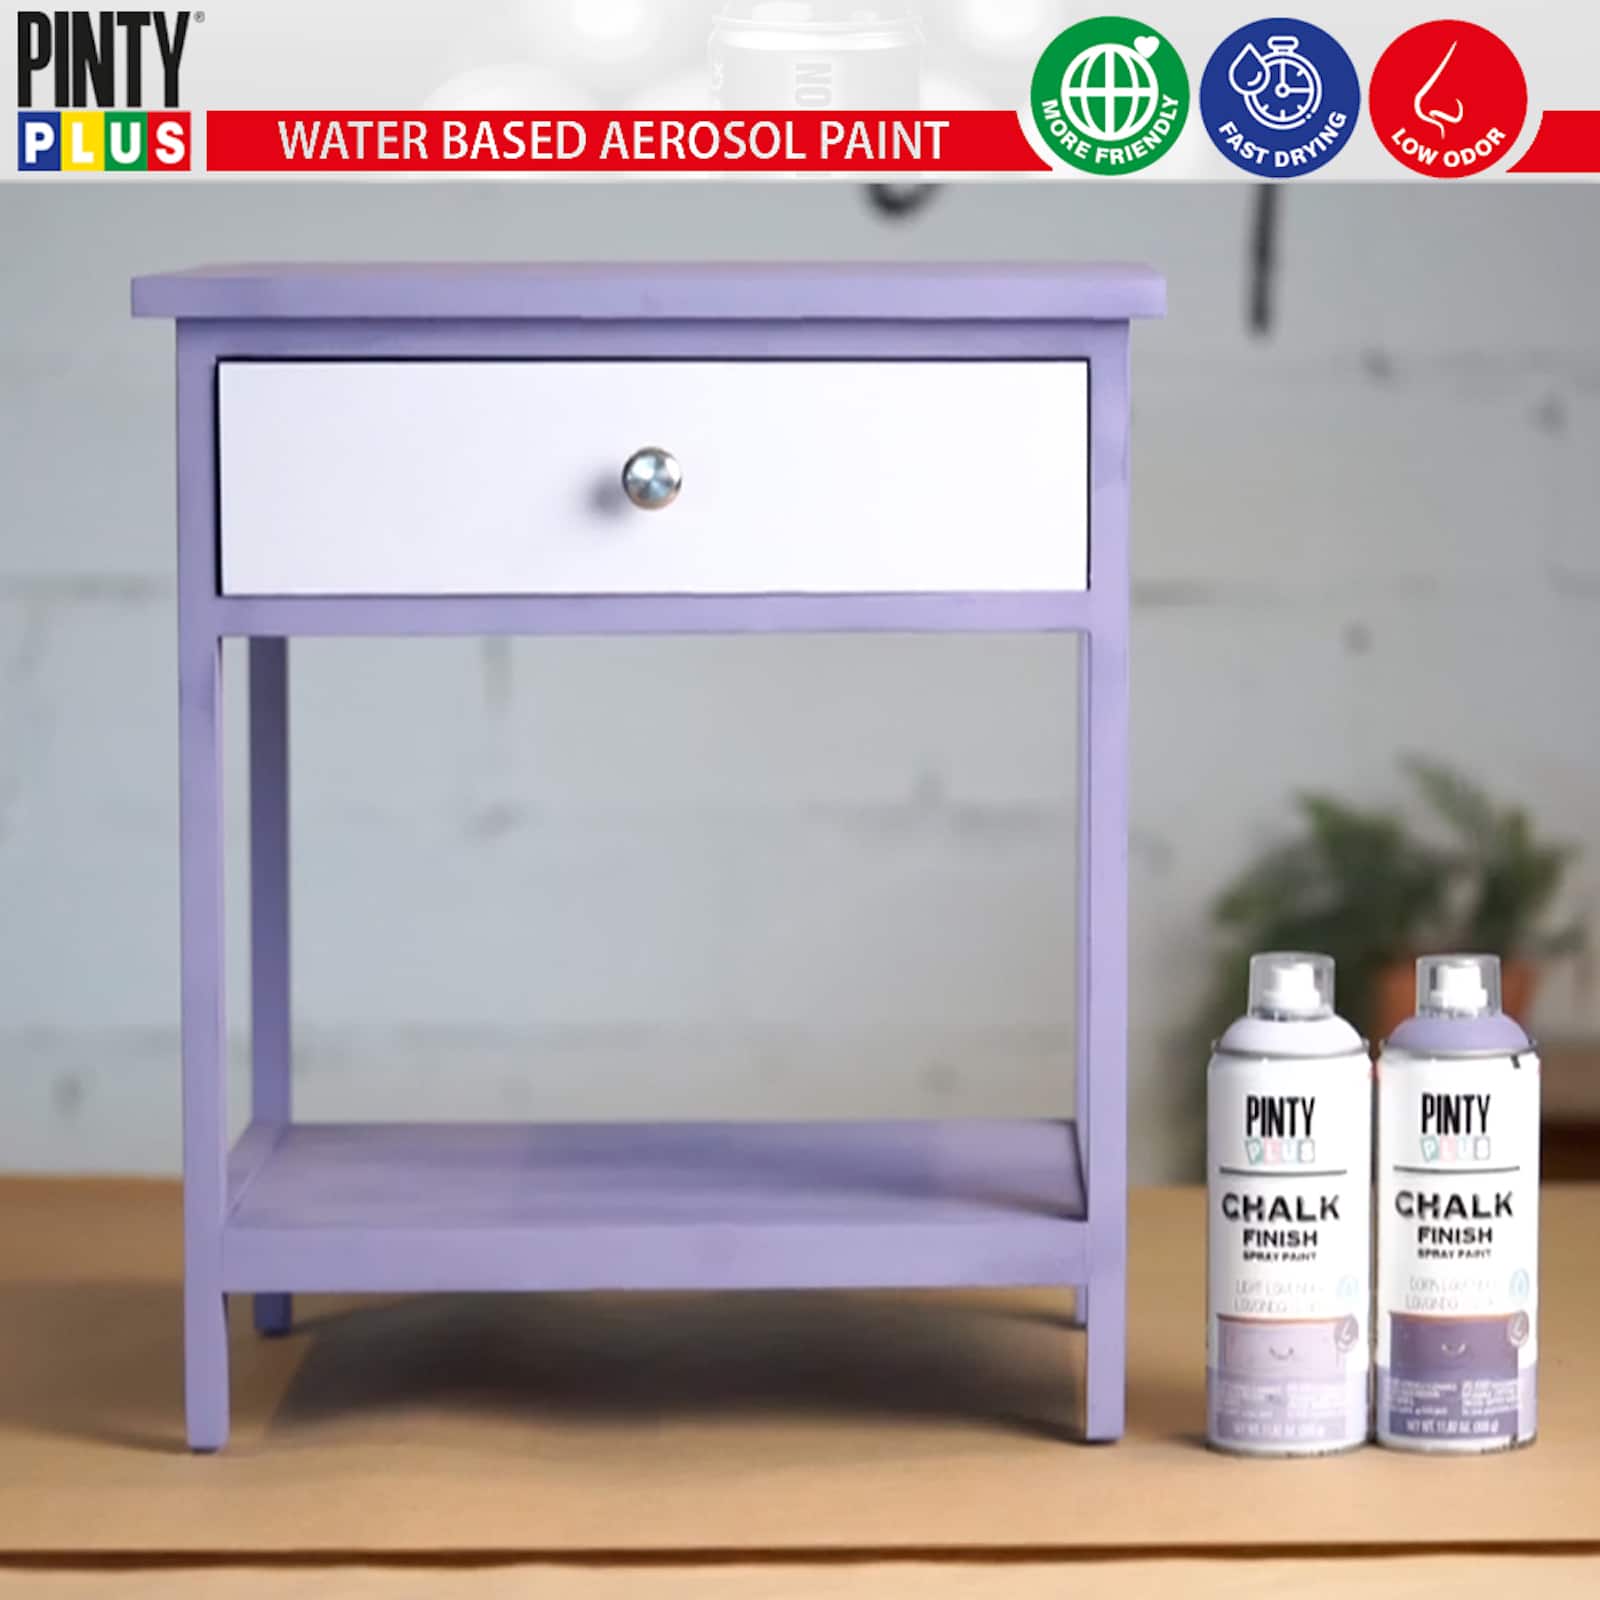 Pintyplus Chalk Finish Spray Paint